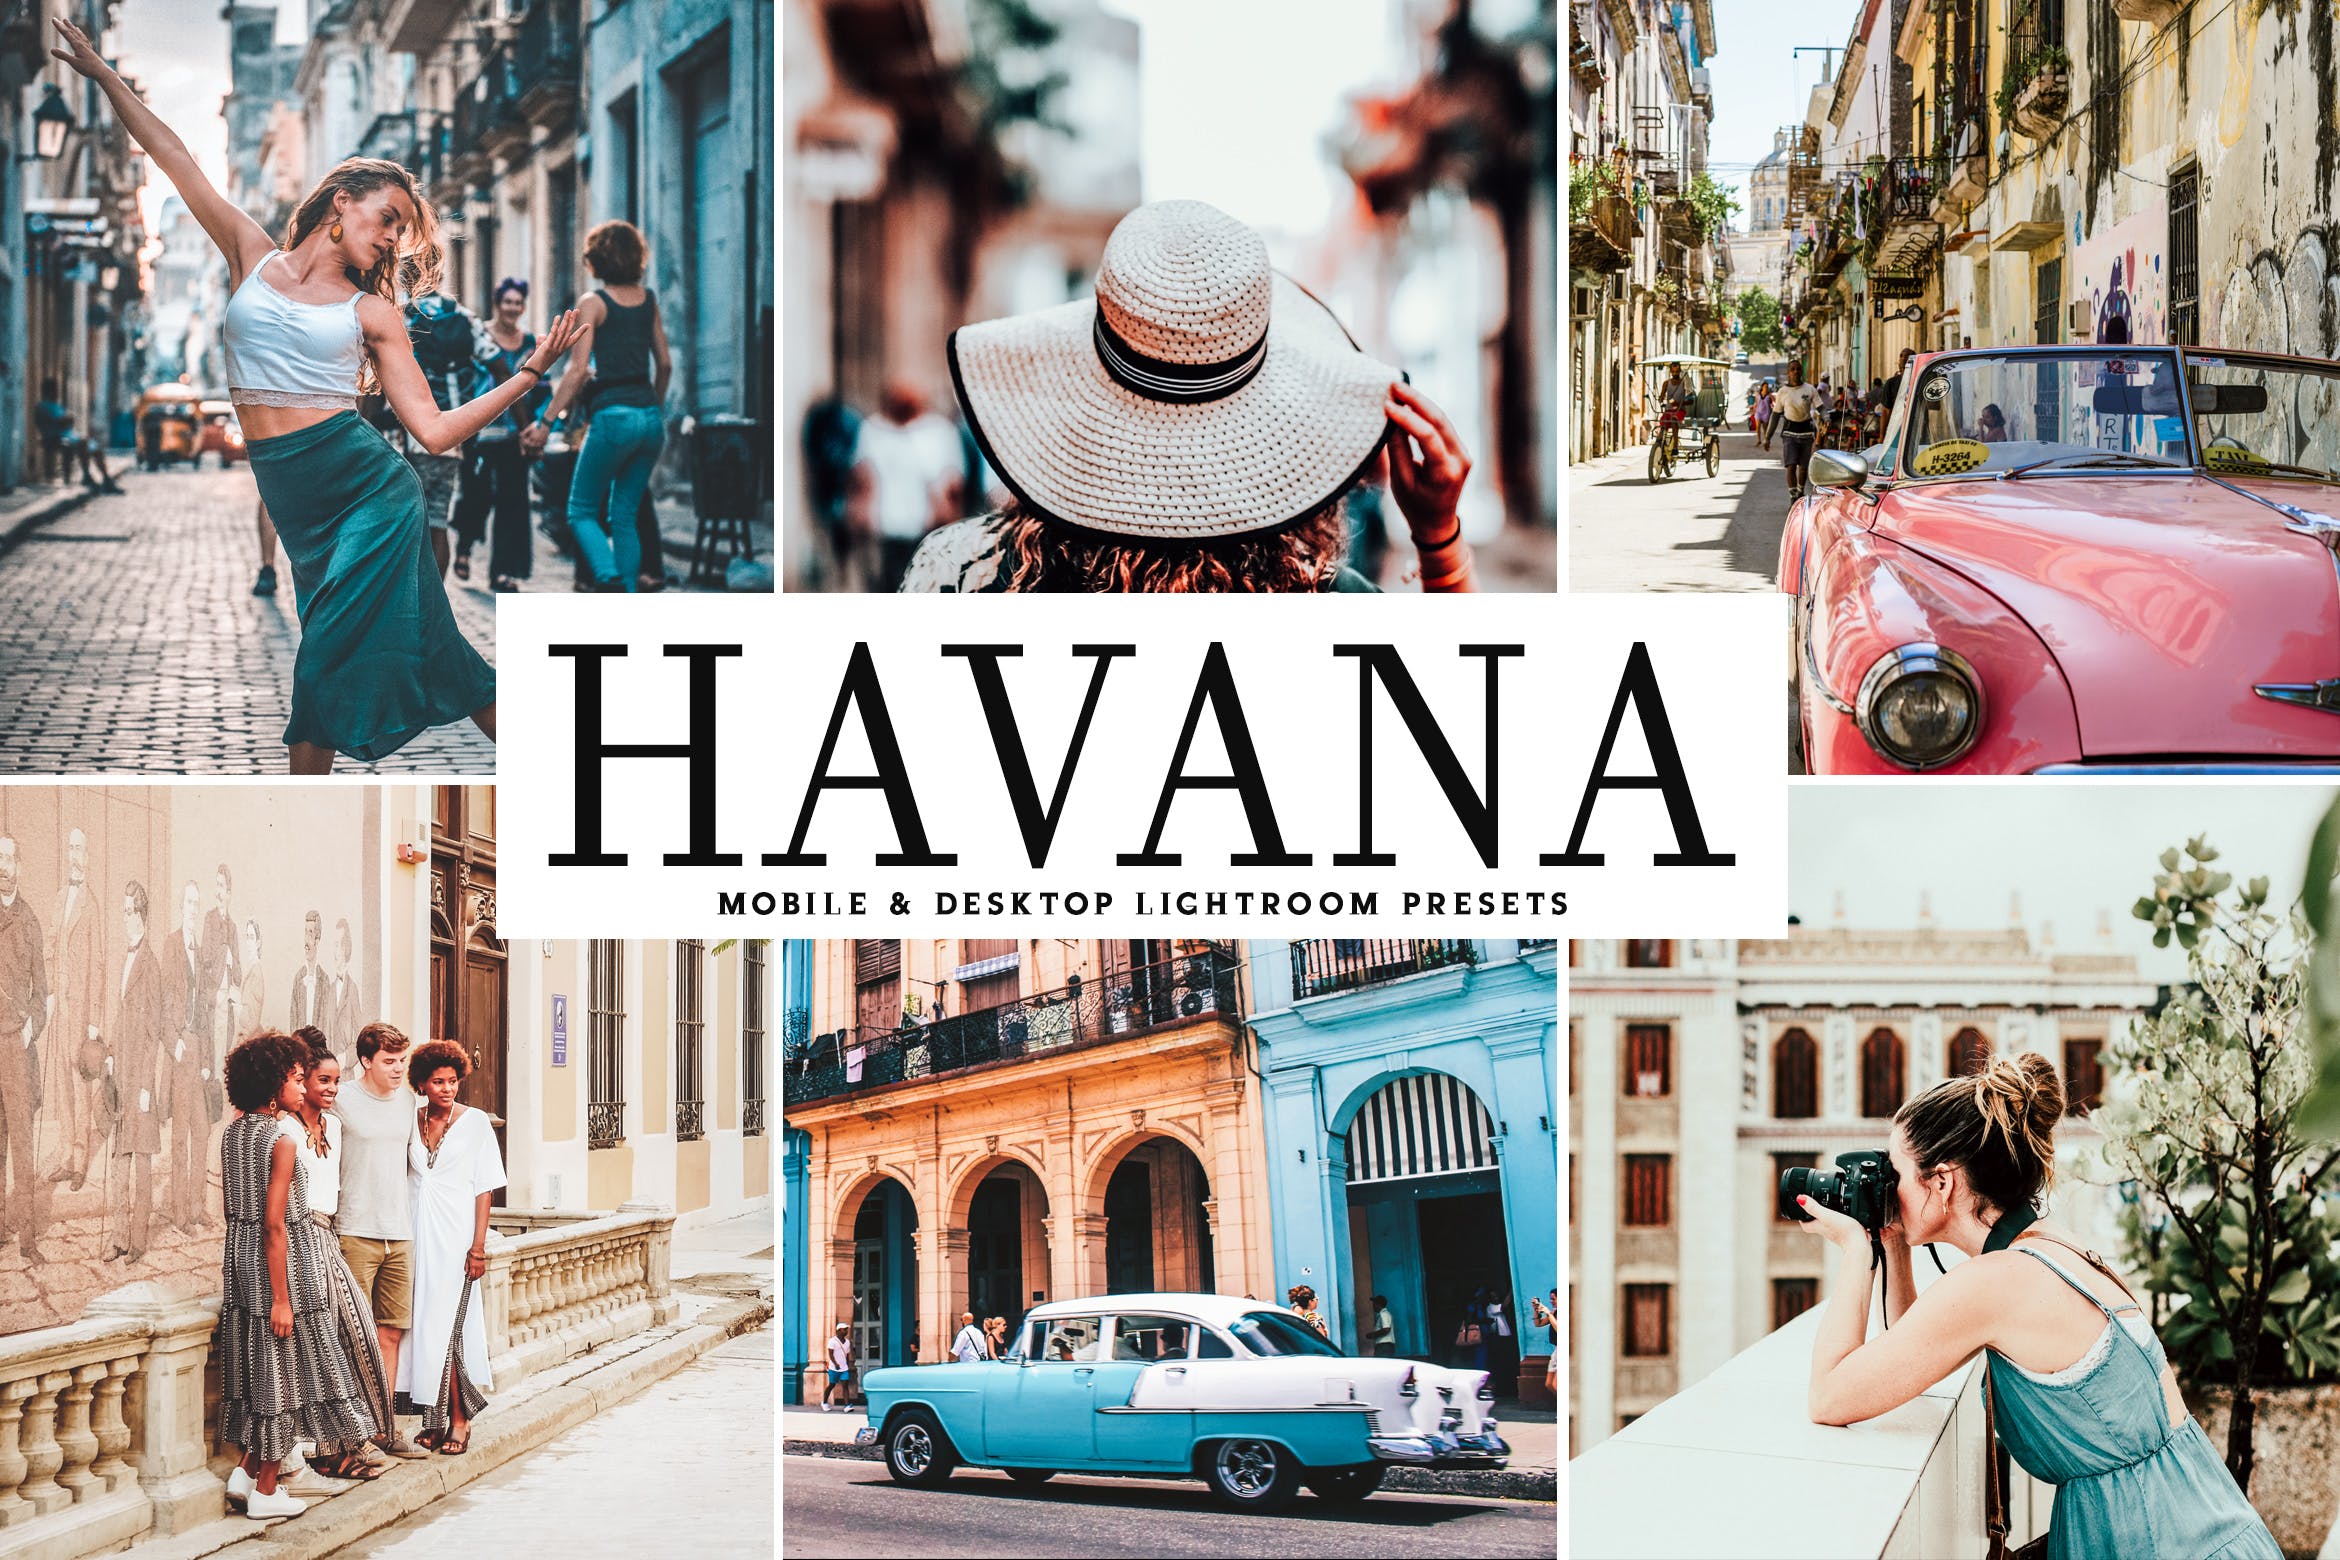 复古风摄影特效LR调色滤镜预设 Havana Mobile & Desktop Lightroom Presets插图